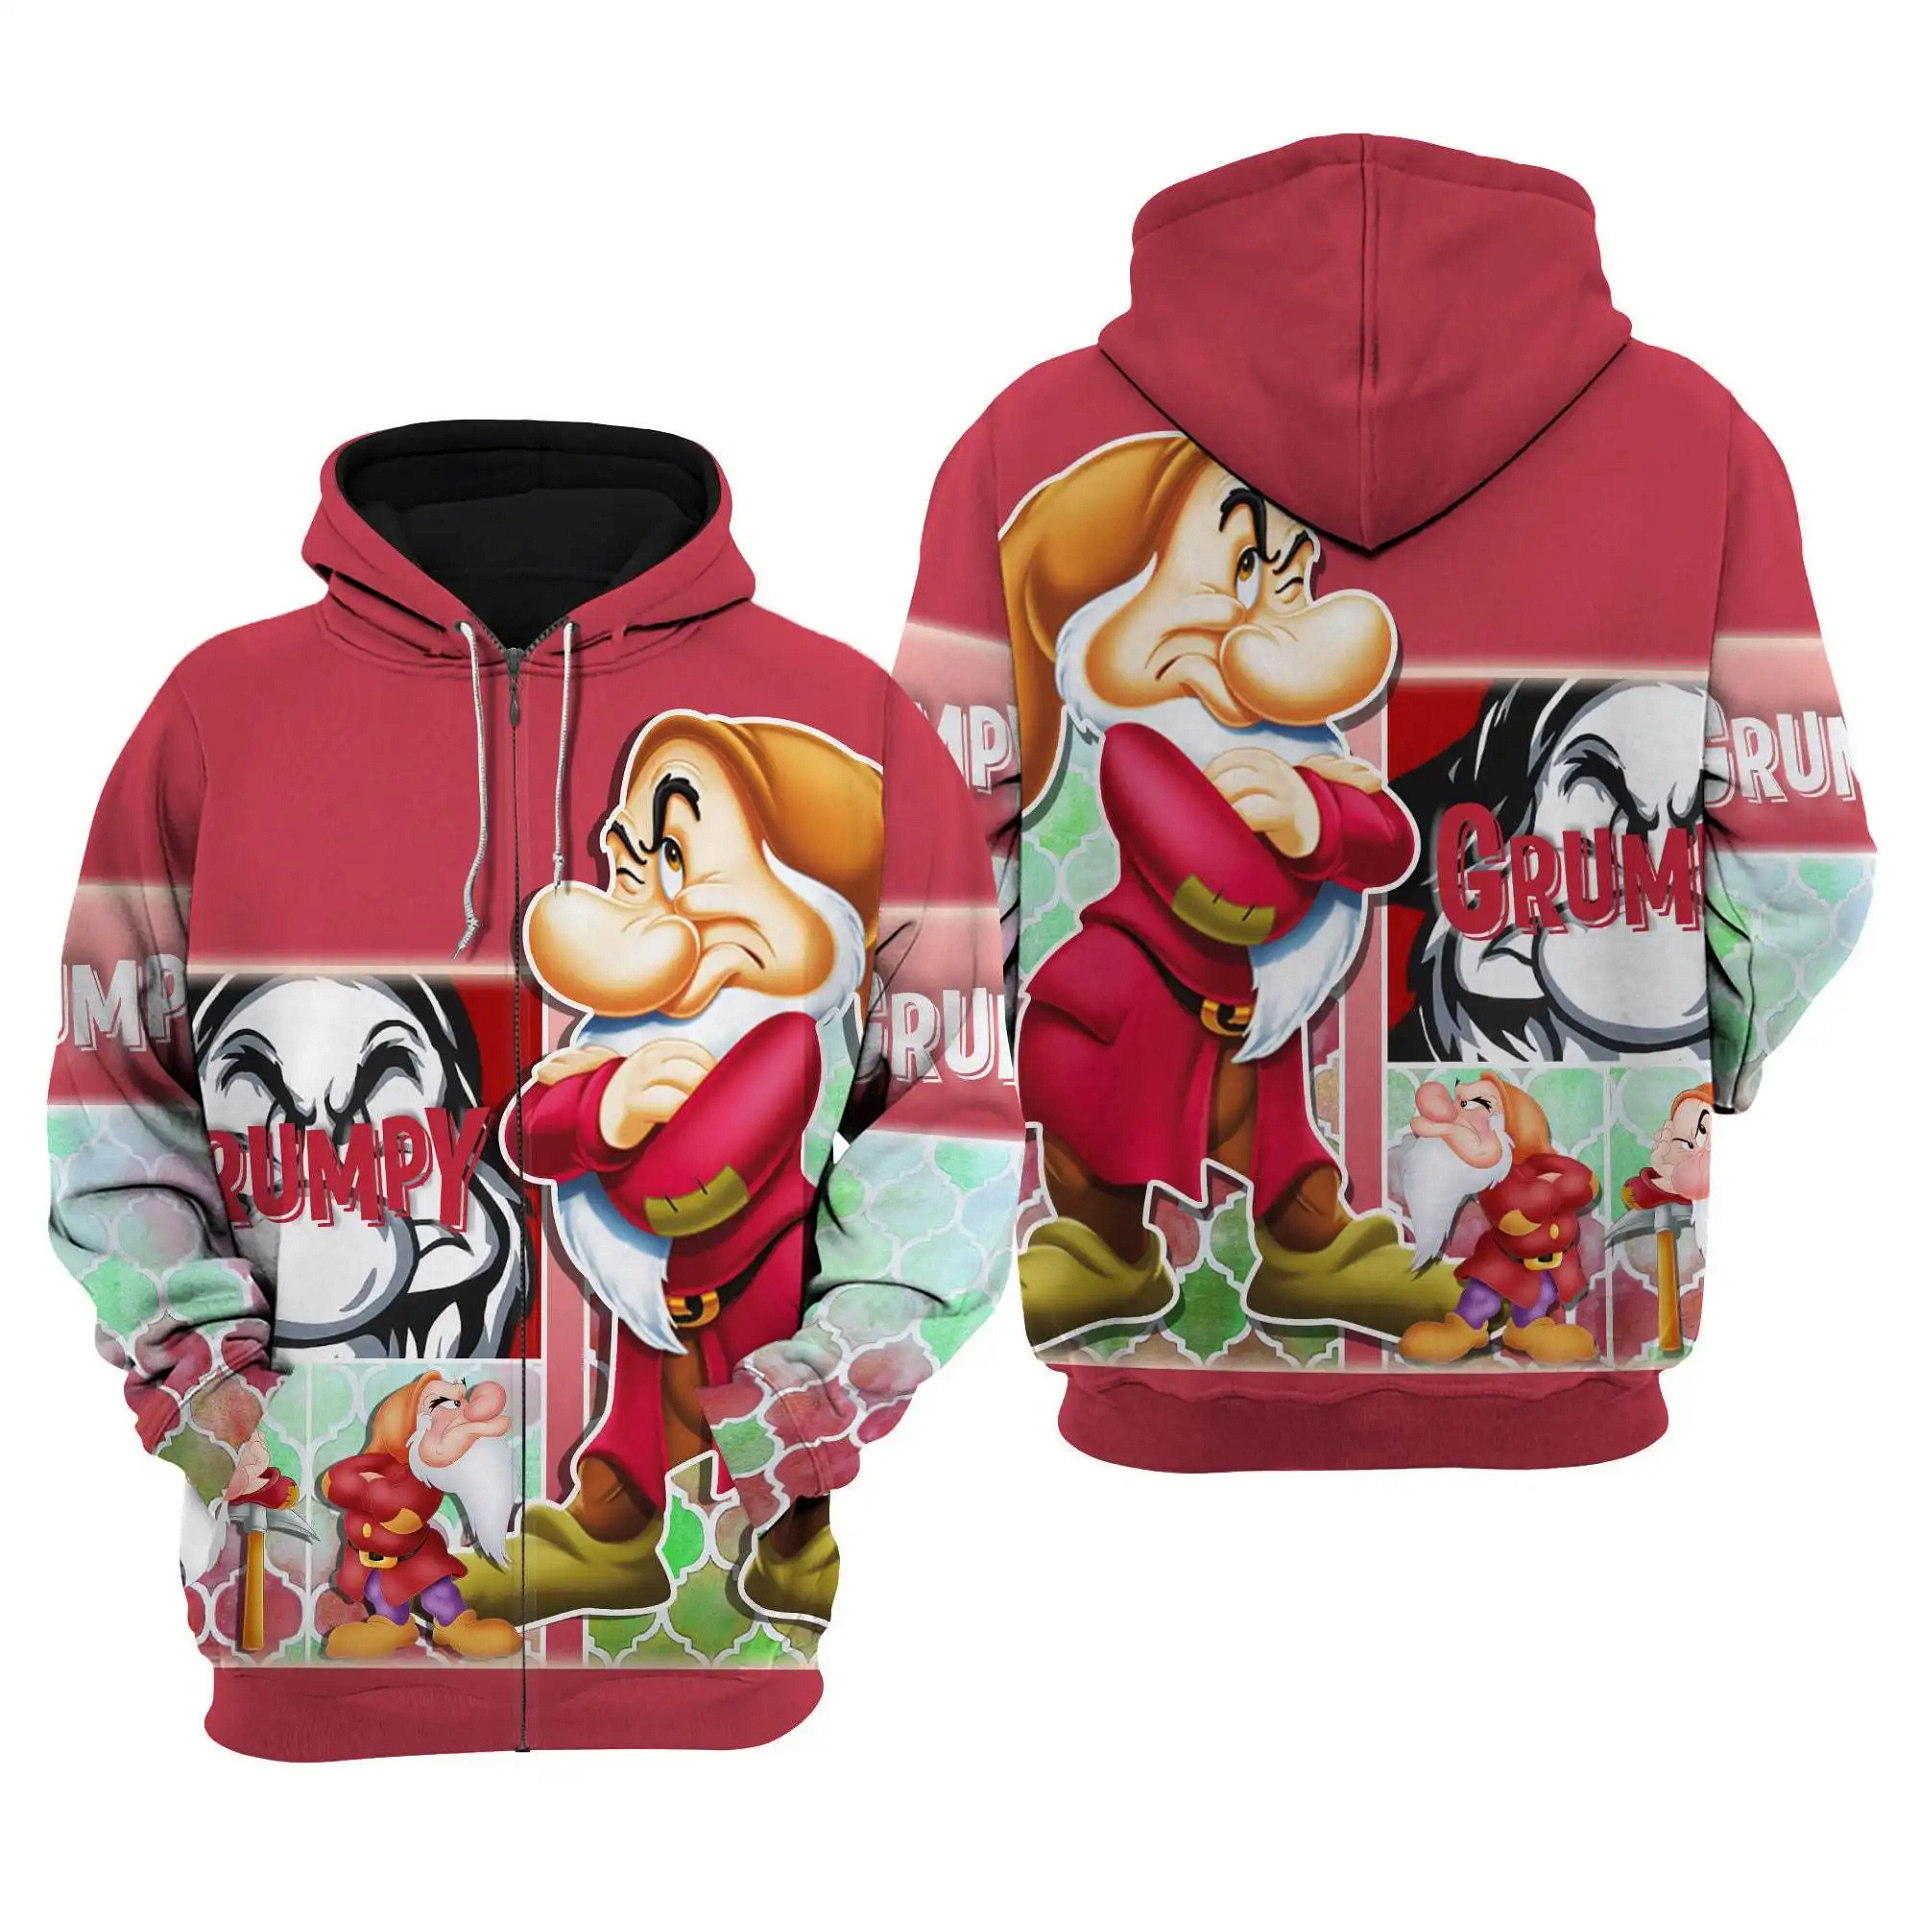 Red Grumpy Dwarf Disney Graphic Cartoon Outfits Clothing Men Women Kids Toddlers Hoodie 3D